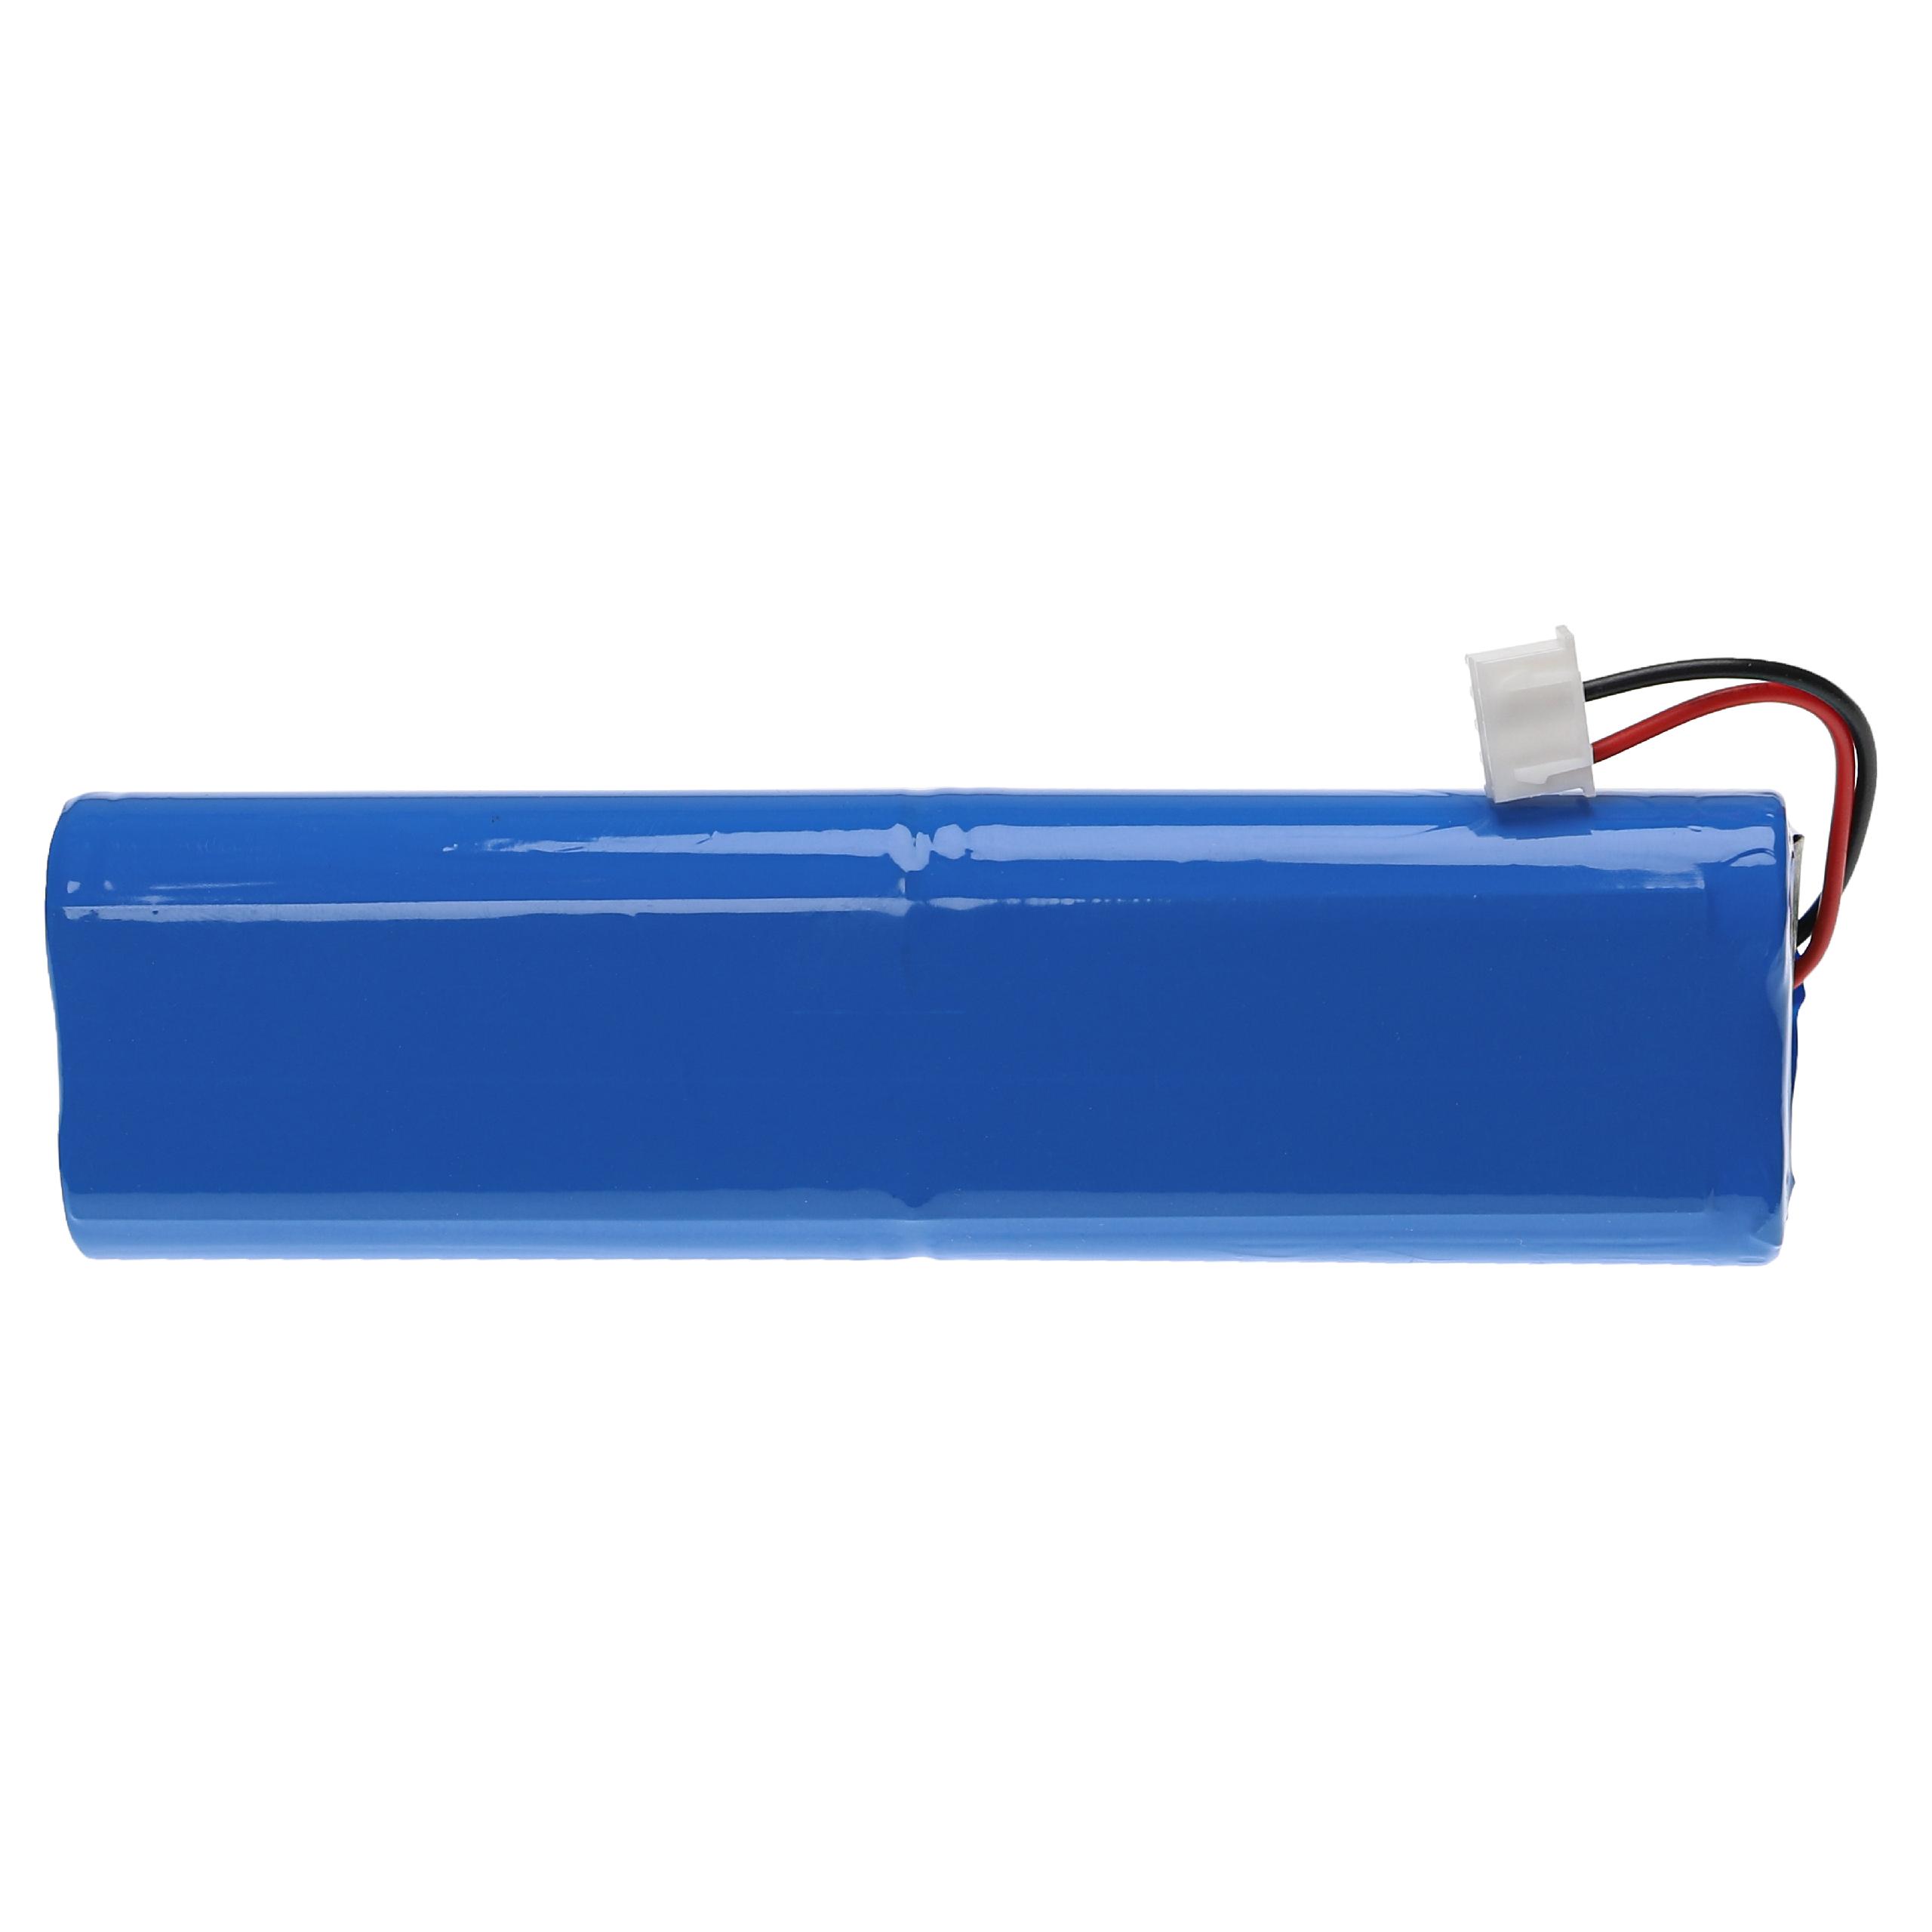 Akumulator do odkurzacza zamiennik Ecovacs S08-LI-144-2500 - 3400 mAh 14,4 V Li-Ion